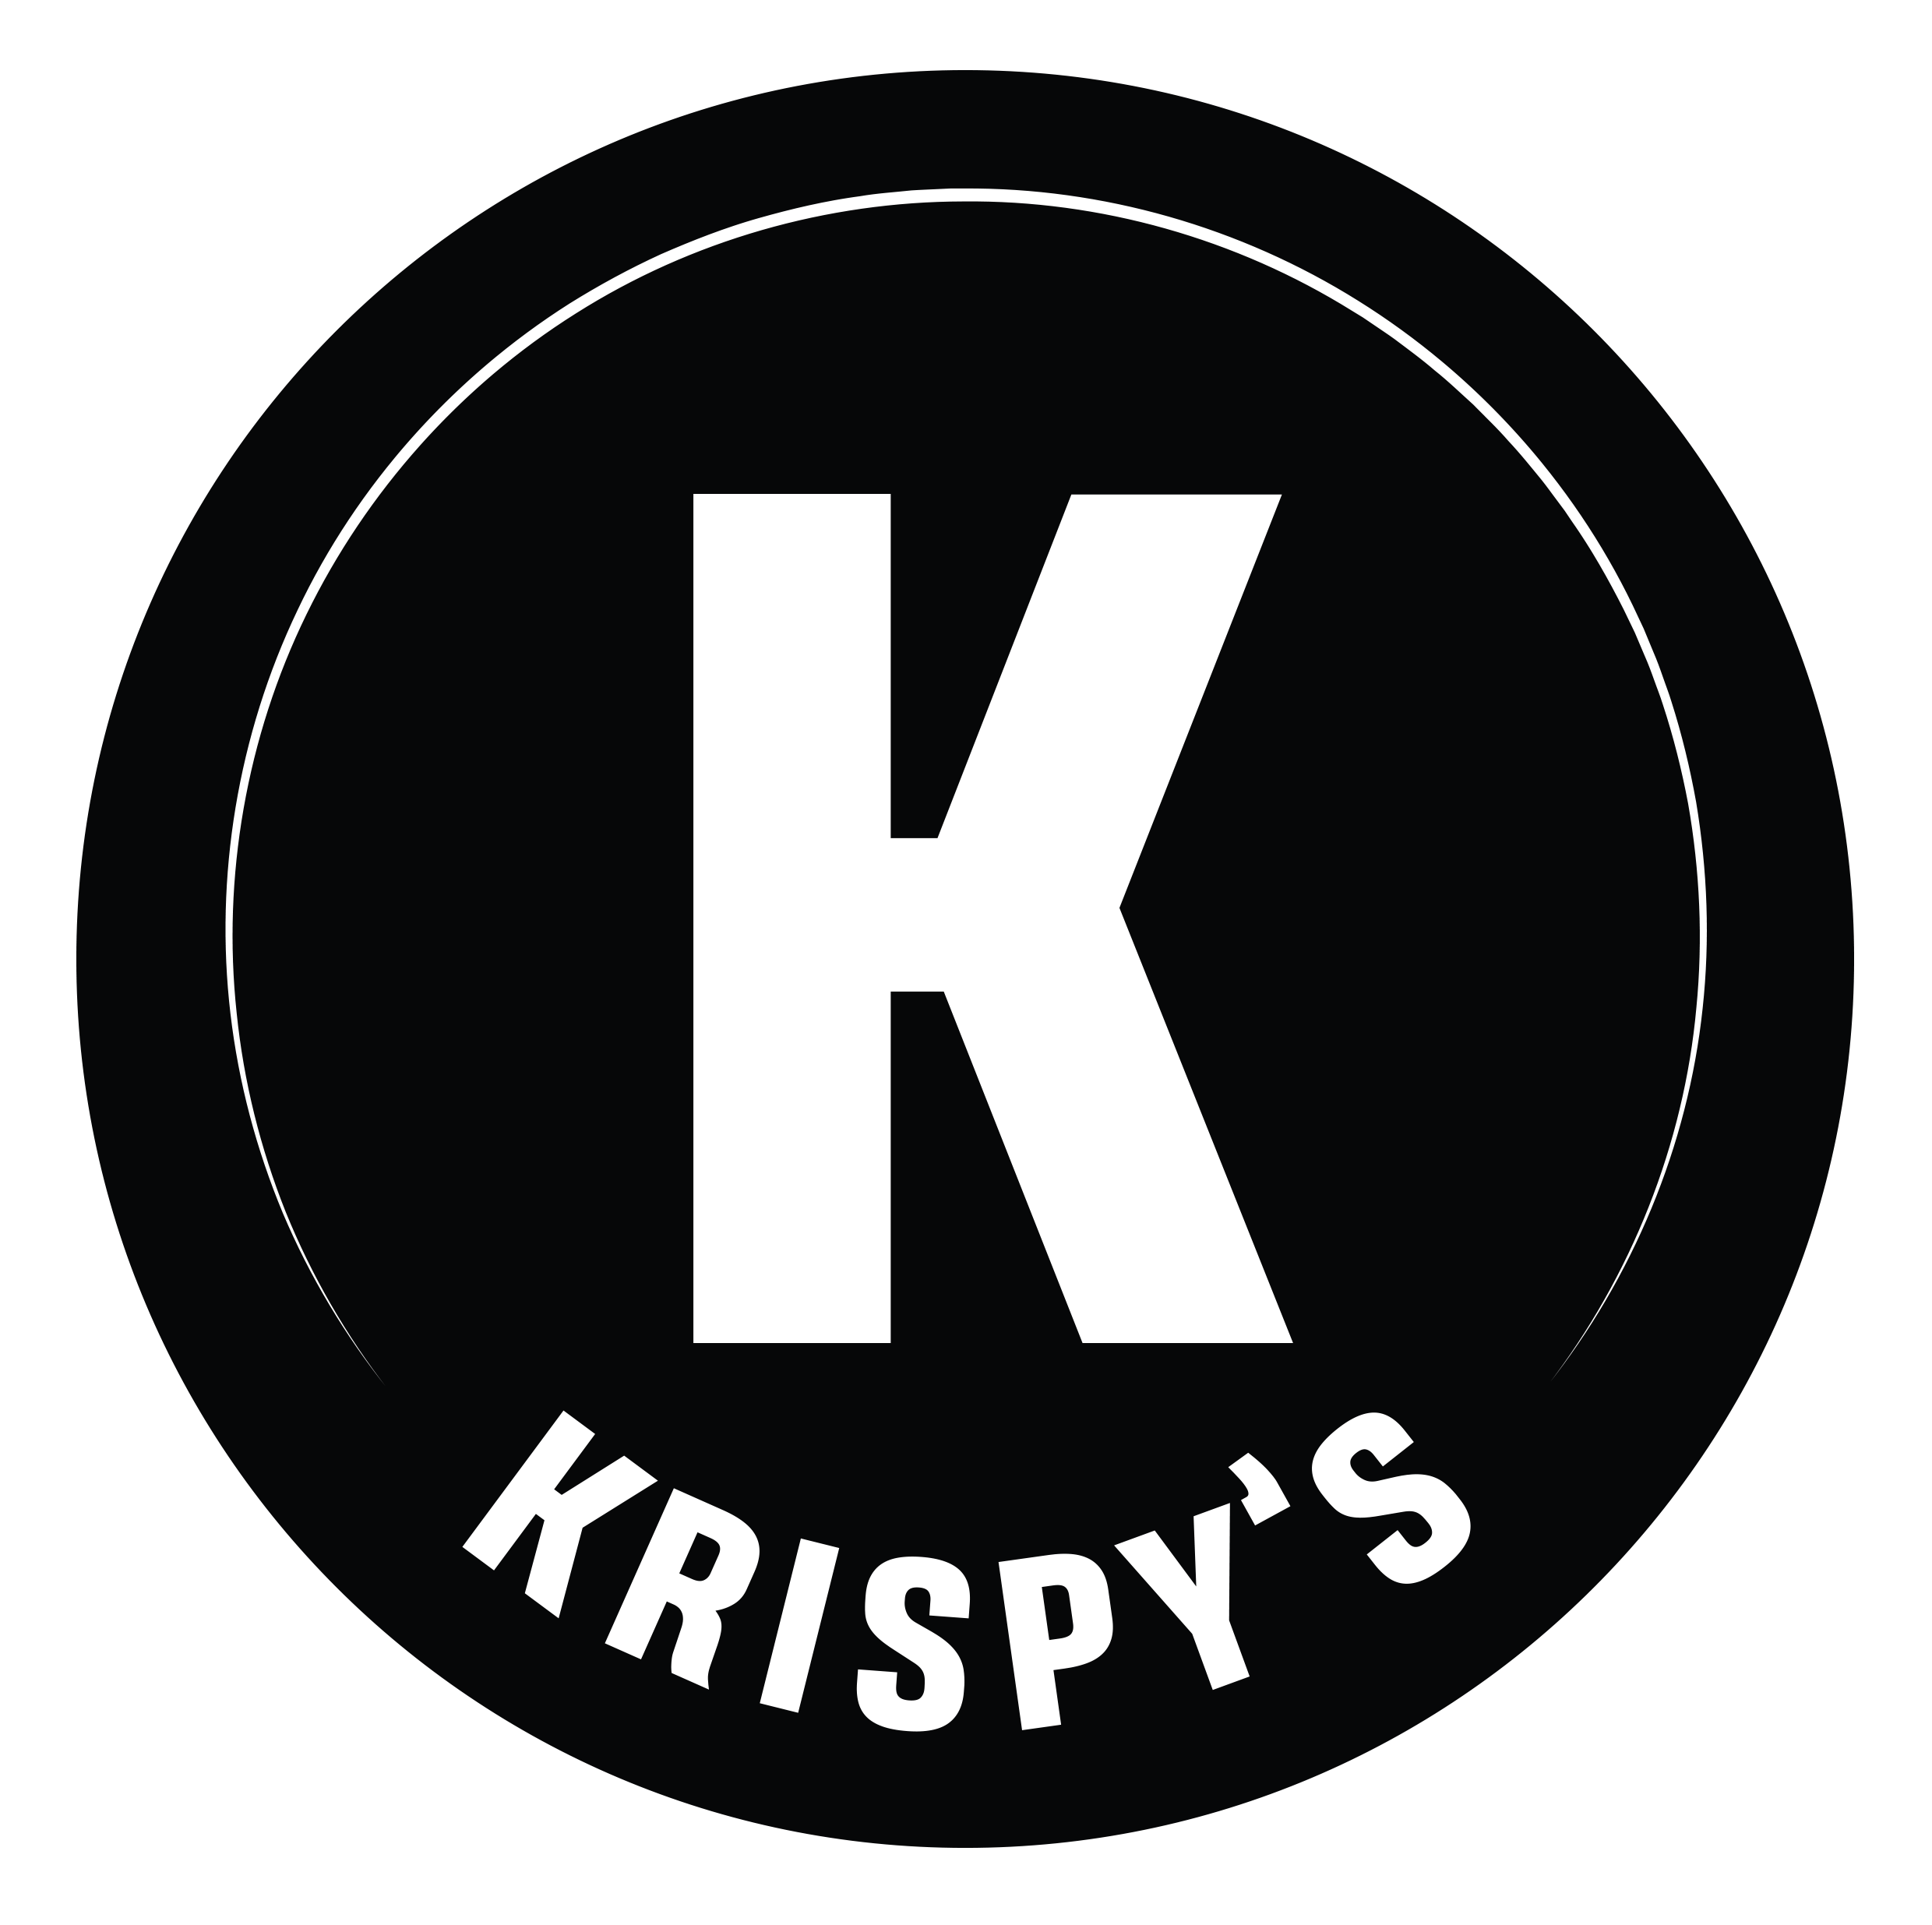 krispy's